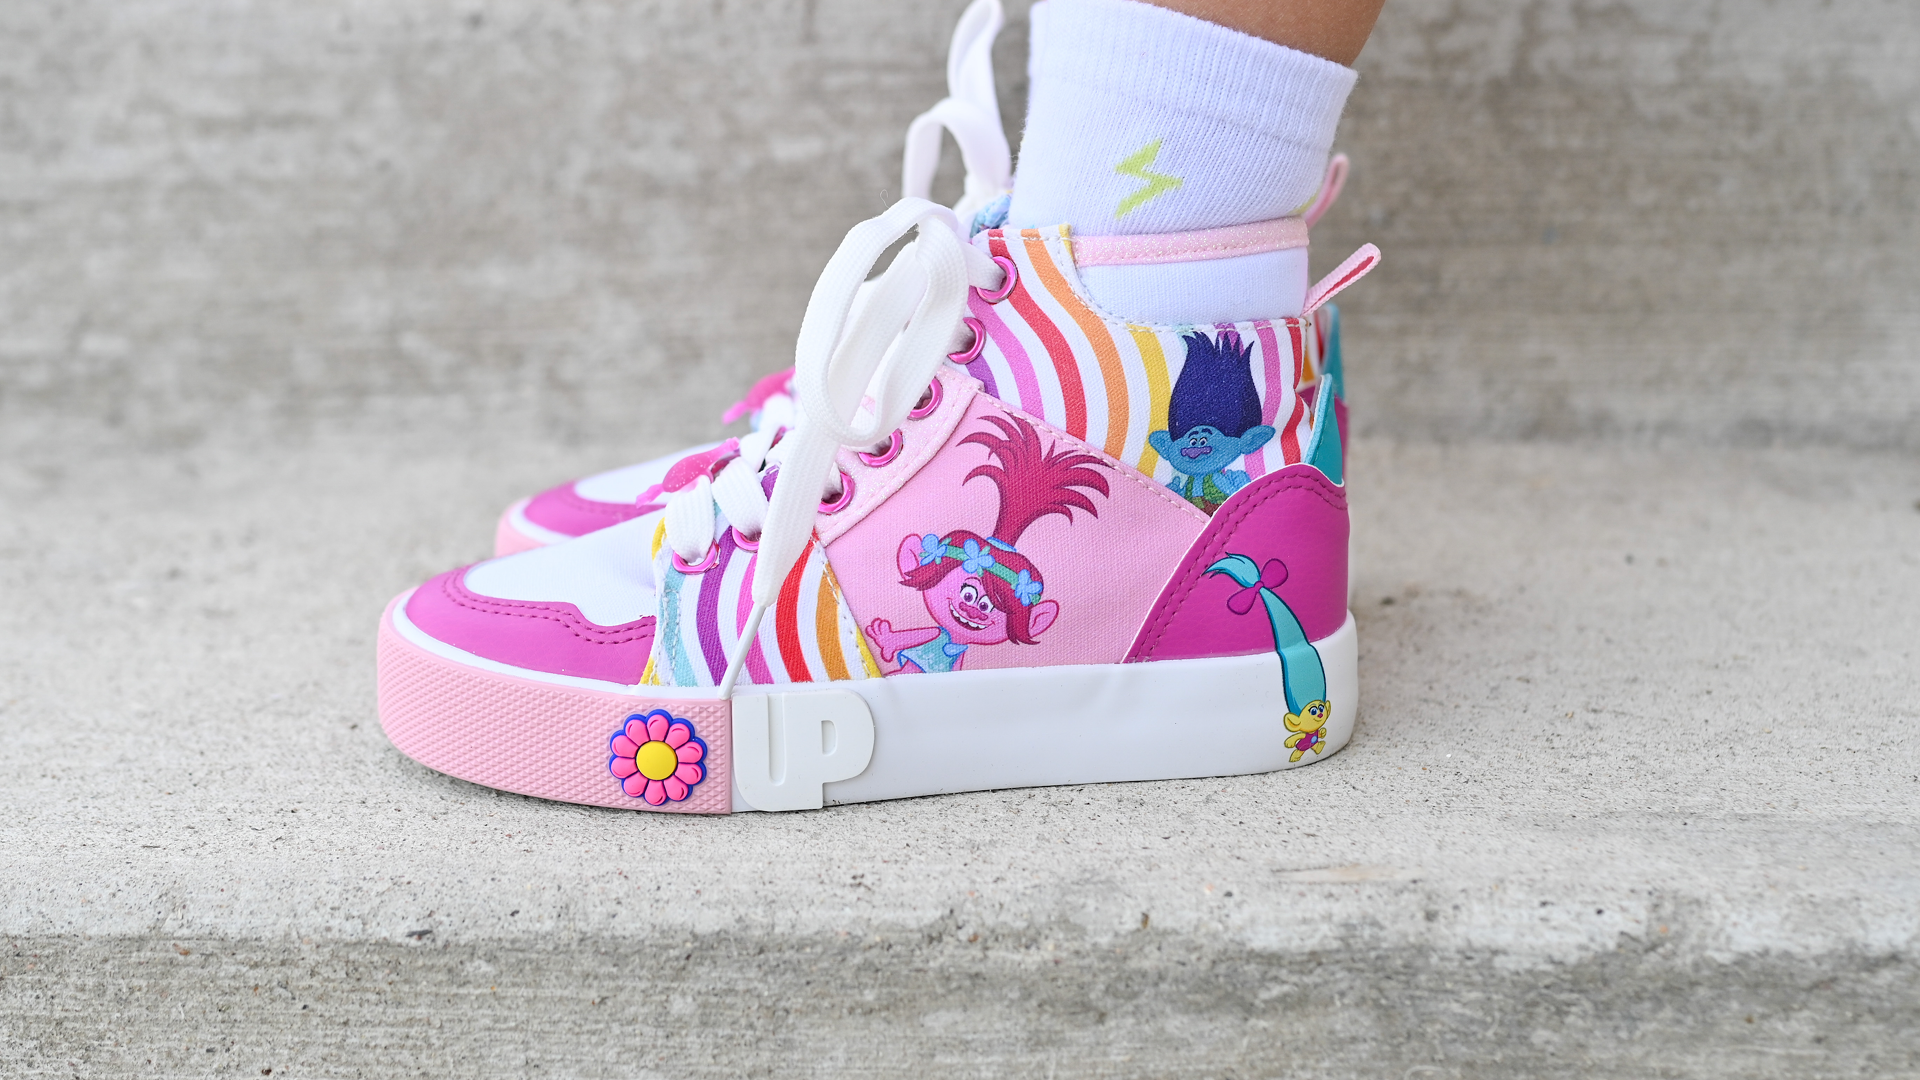 Troll shoes- Troll bling Converse-Girls Troll Shoes-Poppy troll conver –  Pink Toes & Hair Bows